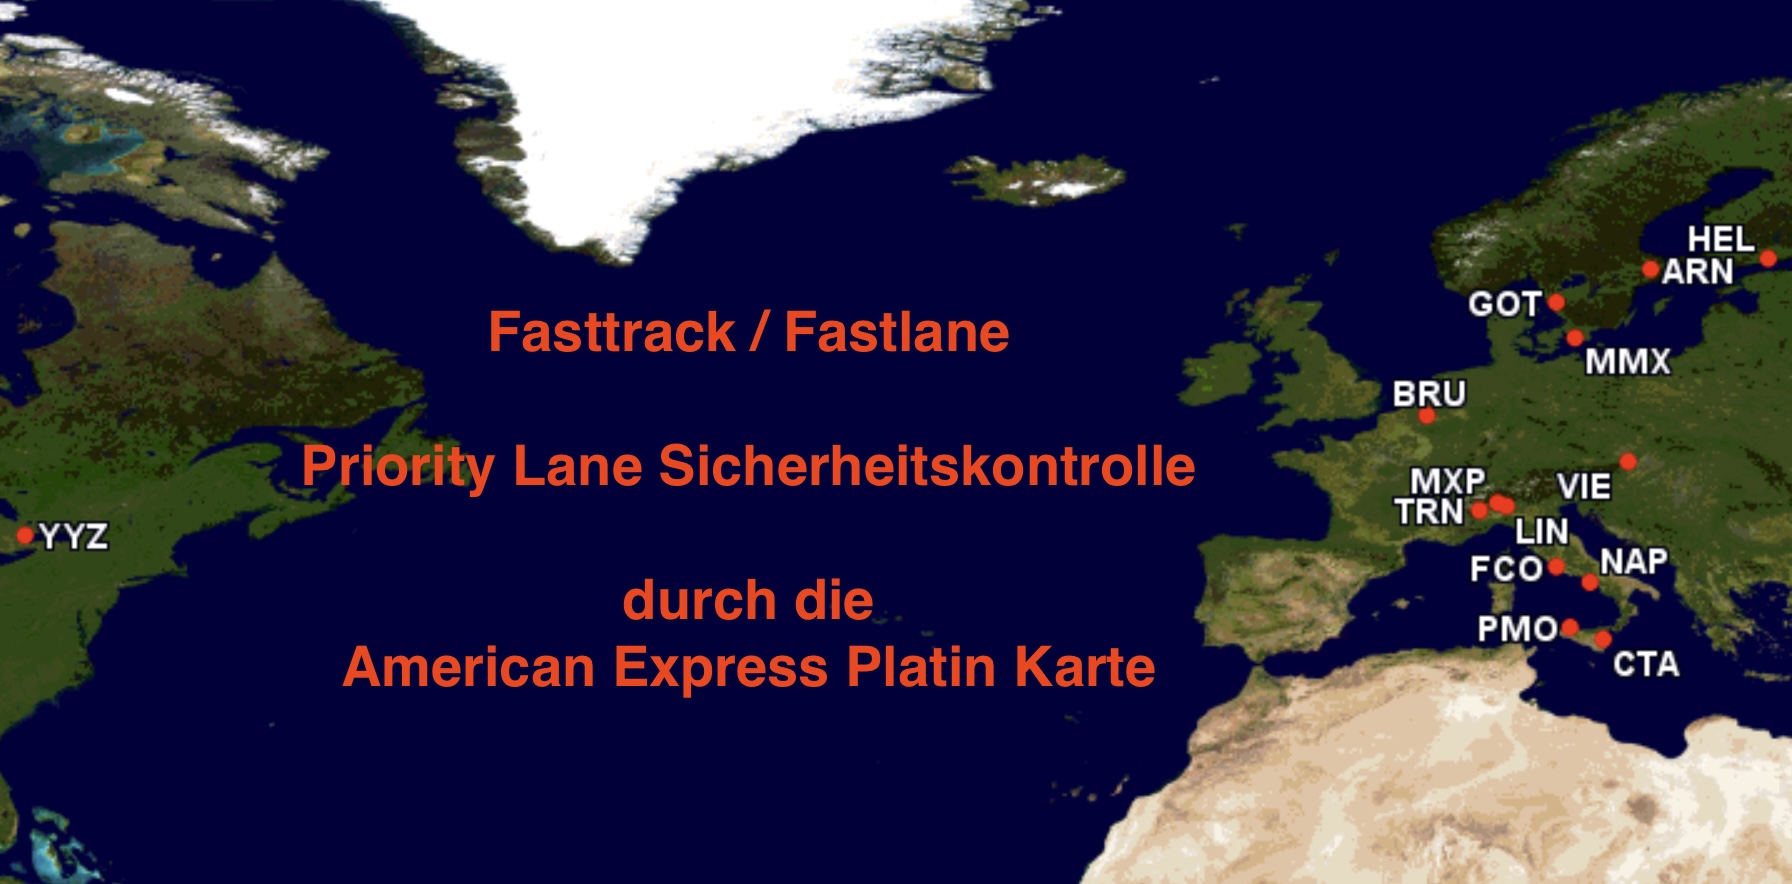 Fastlane American Express Platin, Fastback, Priority security